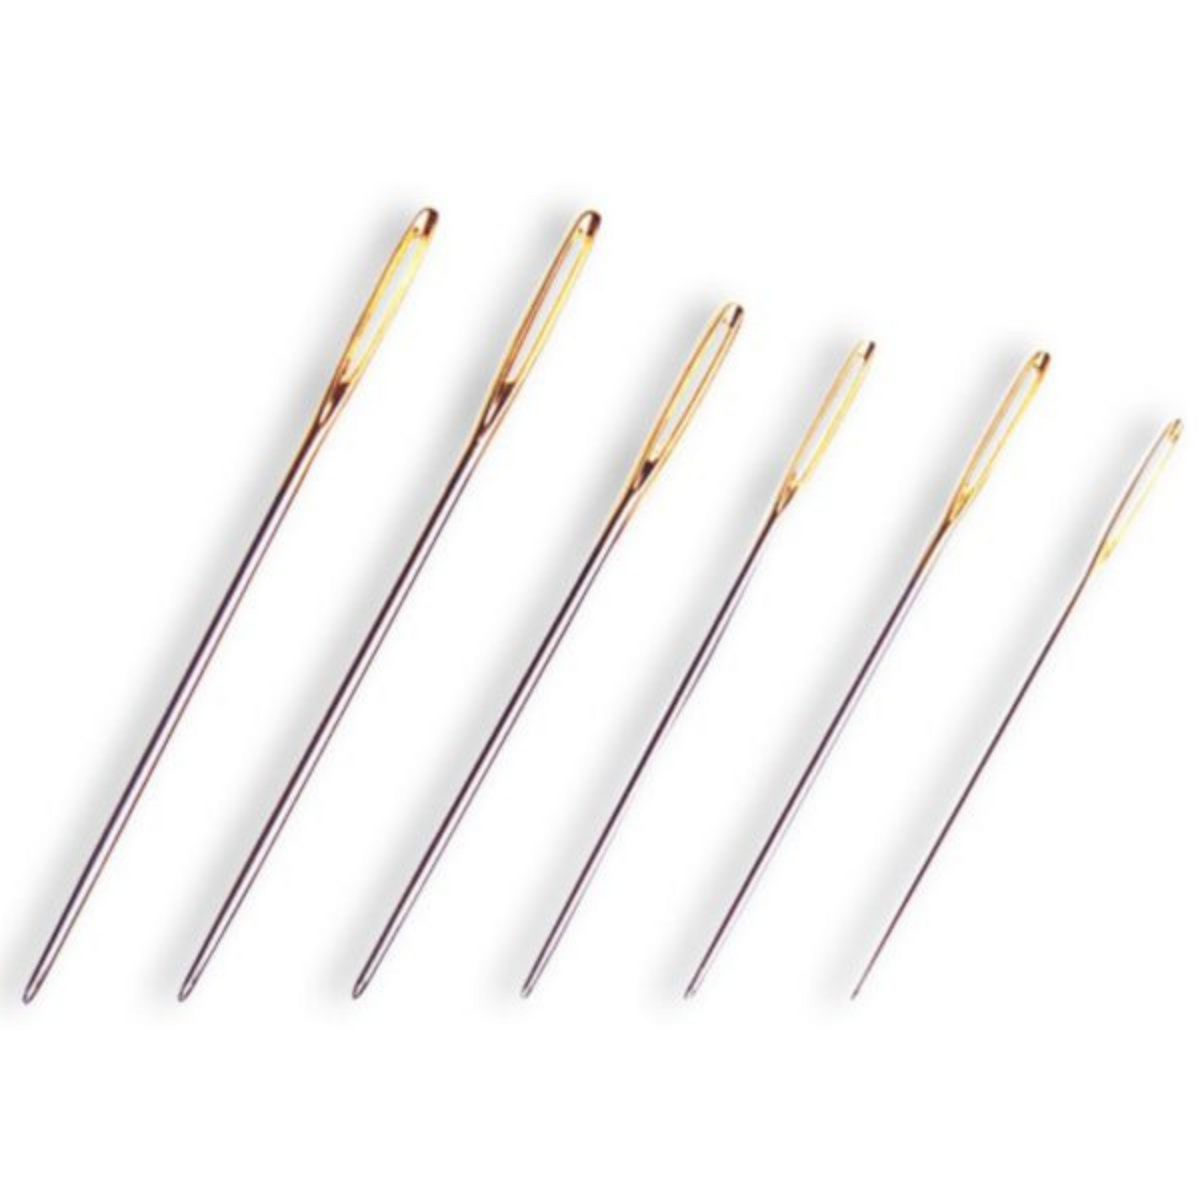 Seeknit | Yarn darning needles set of 6